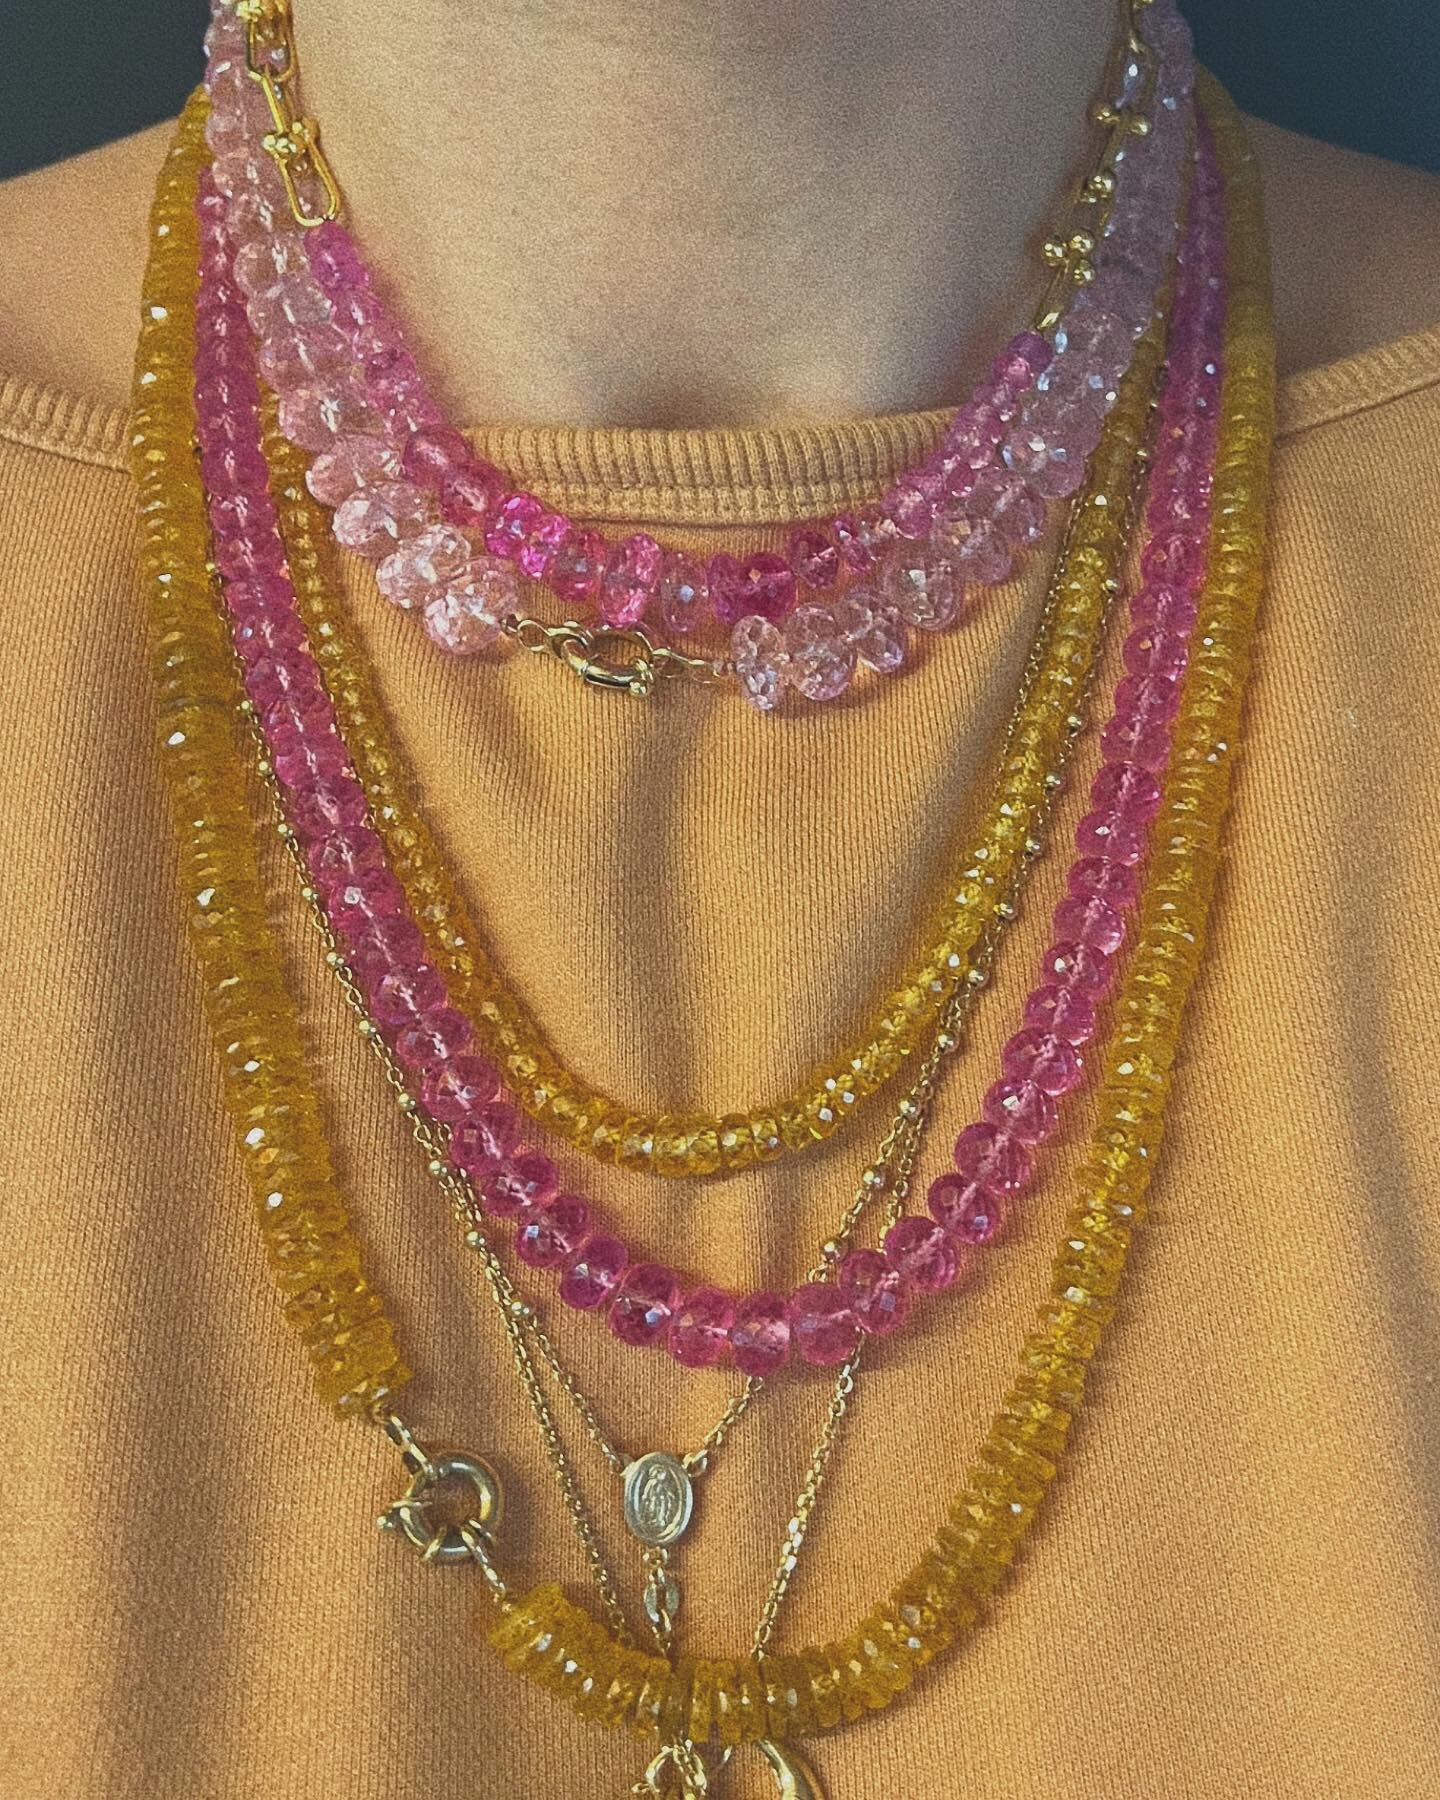 Pastel neck mess💕💛💕

#neckmess #neckmessoftheday #encirkledjewelry